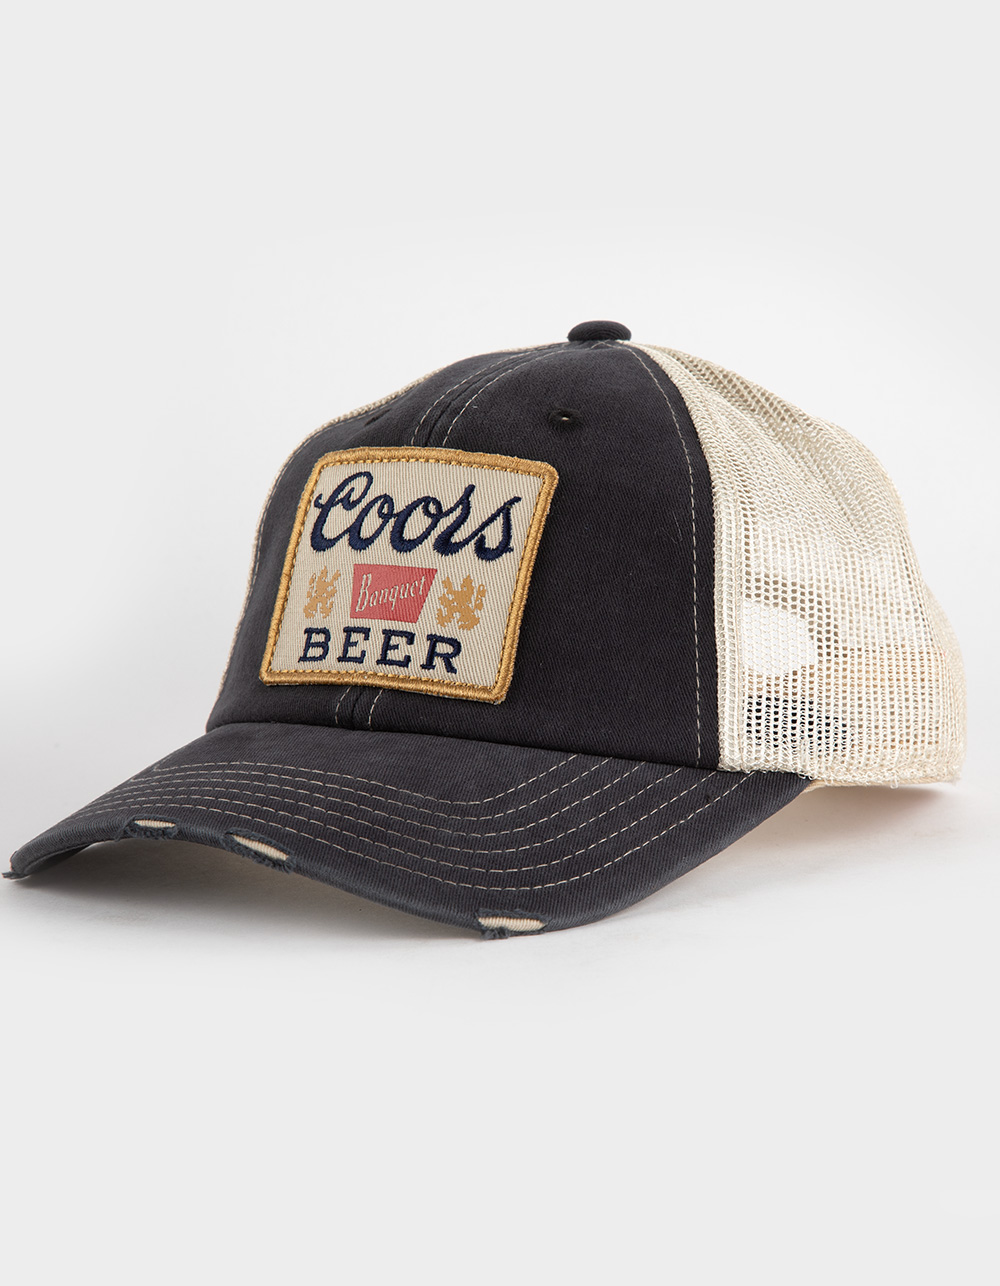 AMERICAN NEEDLE Coors Orville Trucker Hat